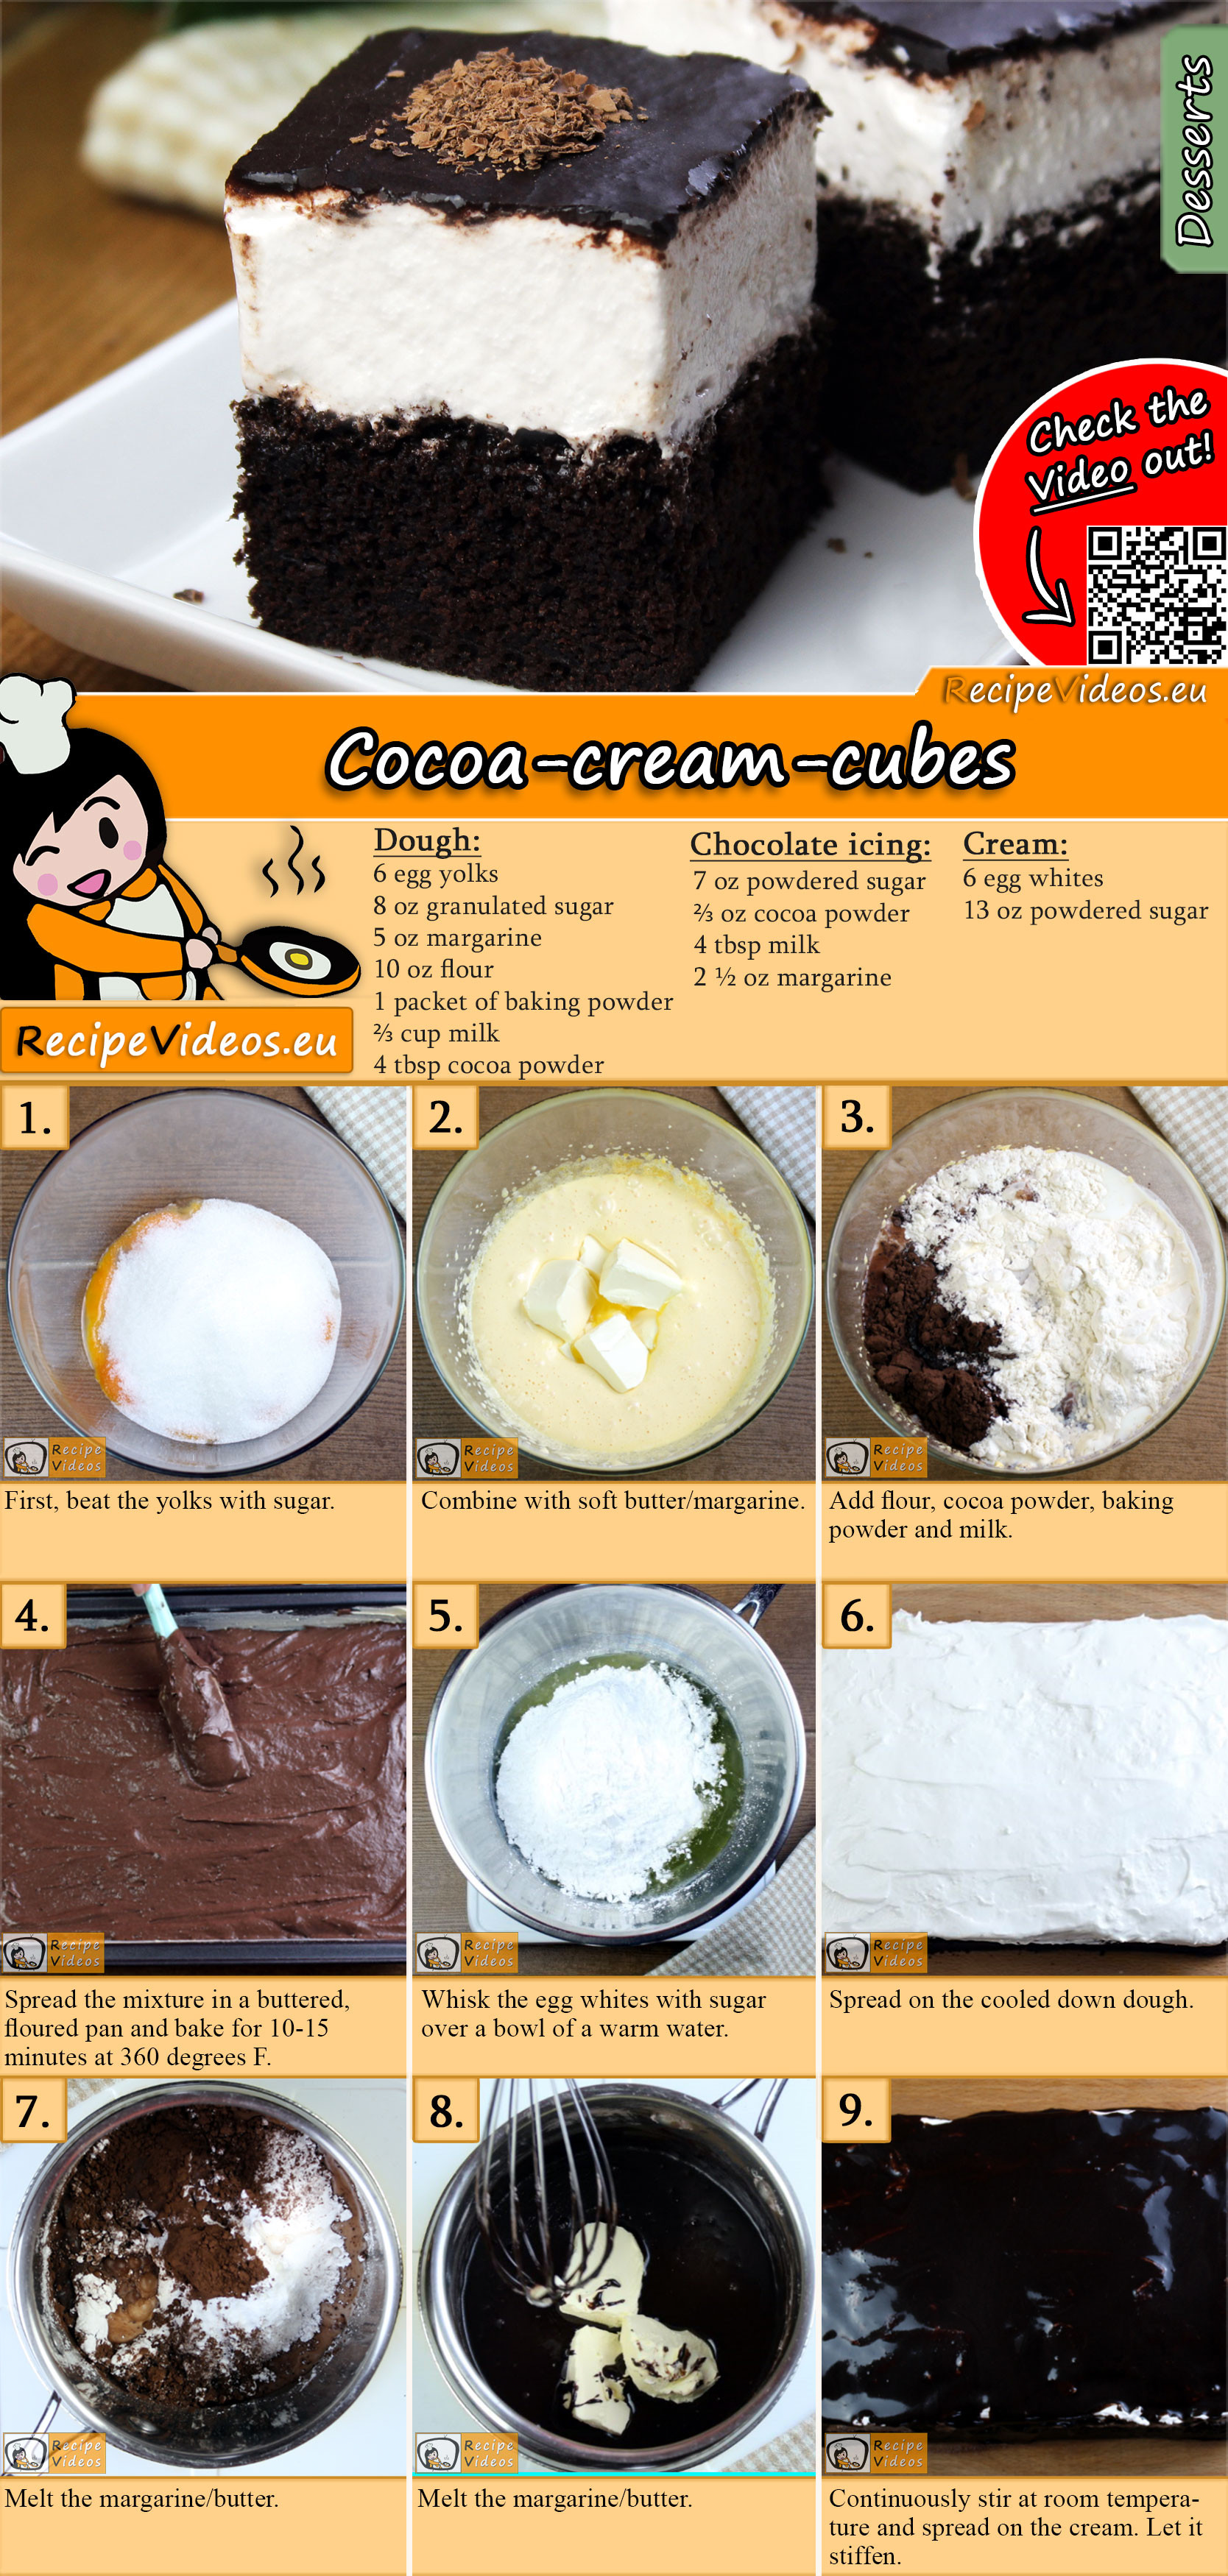 Cocoa-cream-cubes recipe with video